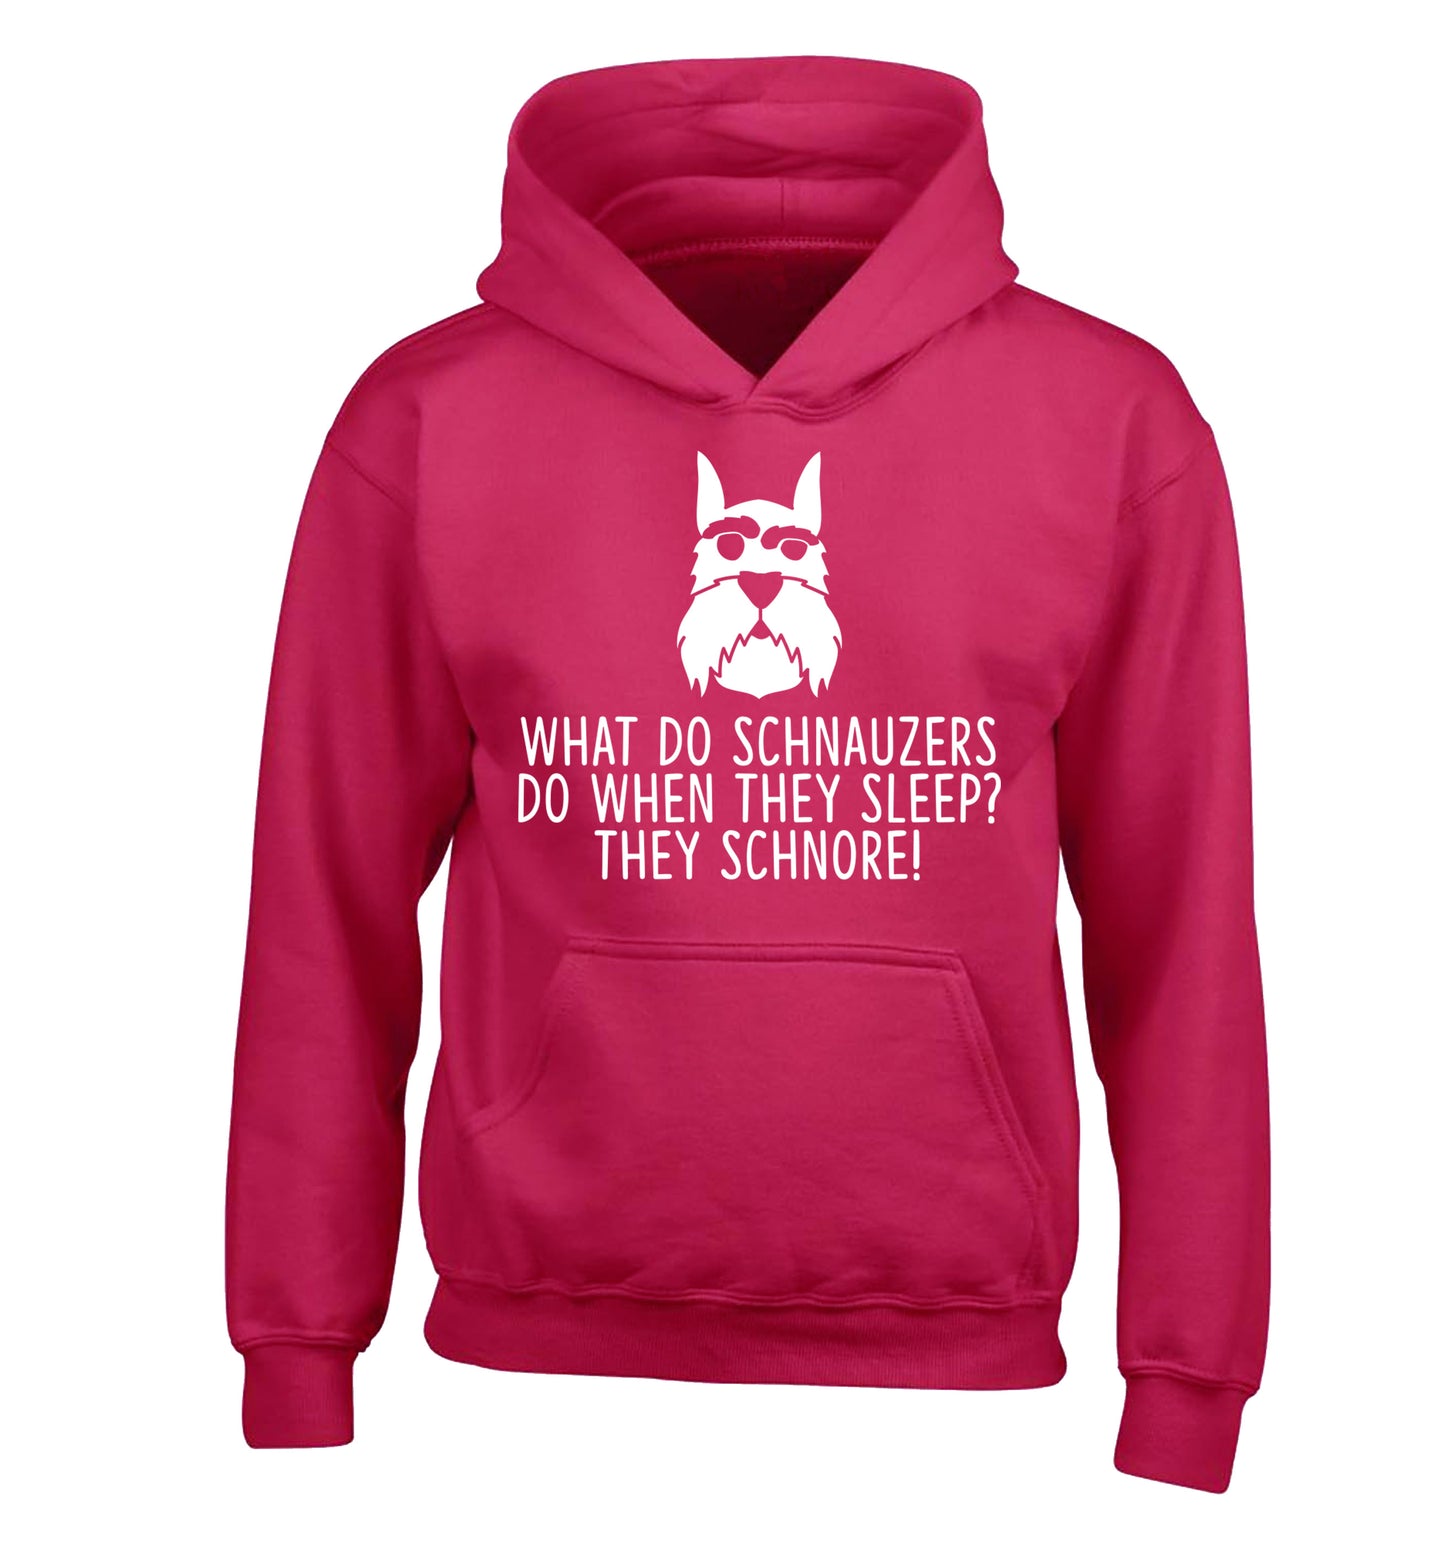 What do schnauzers do when they sleep? Schnore! children's pink hoodie 12-13 Years